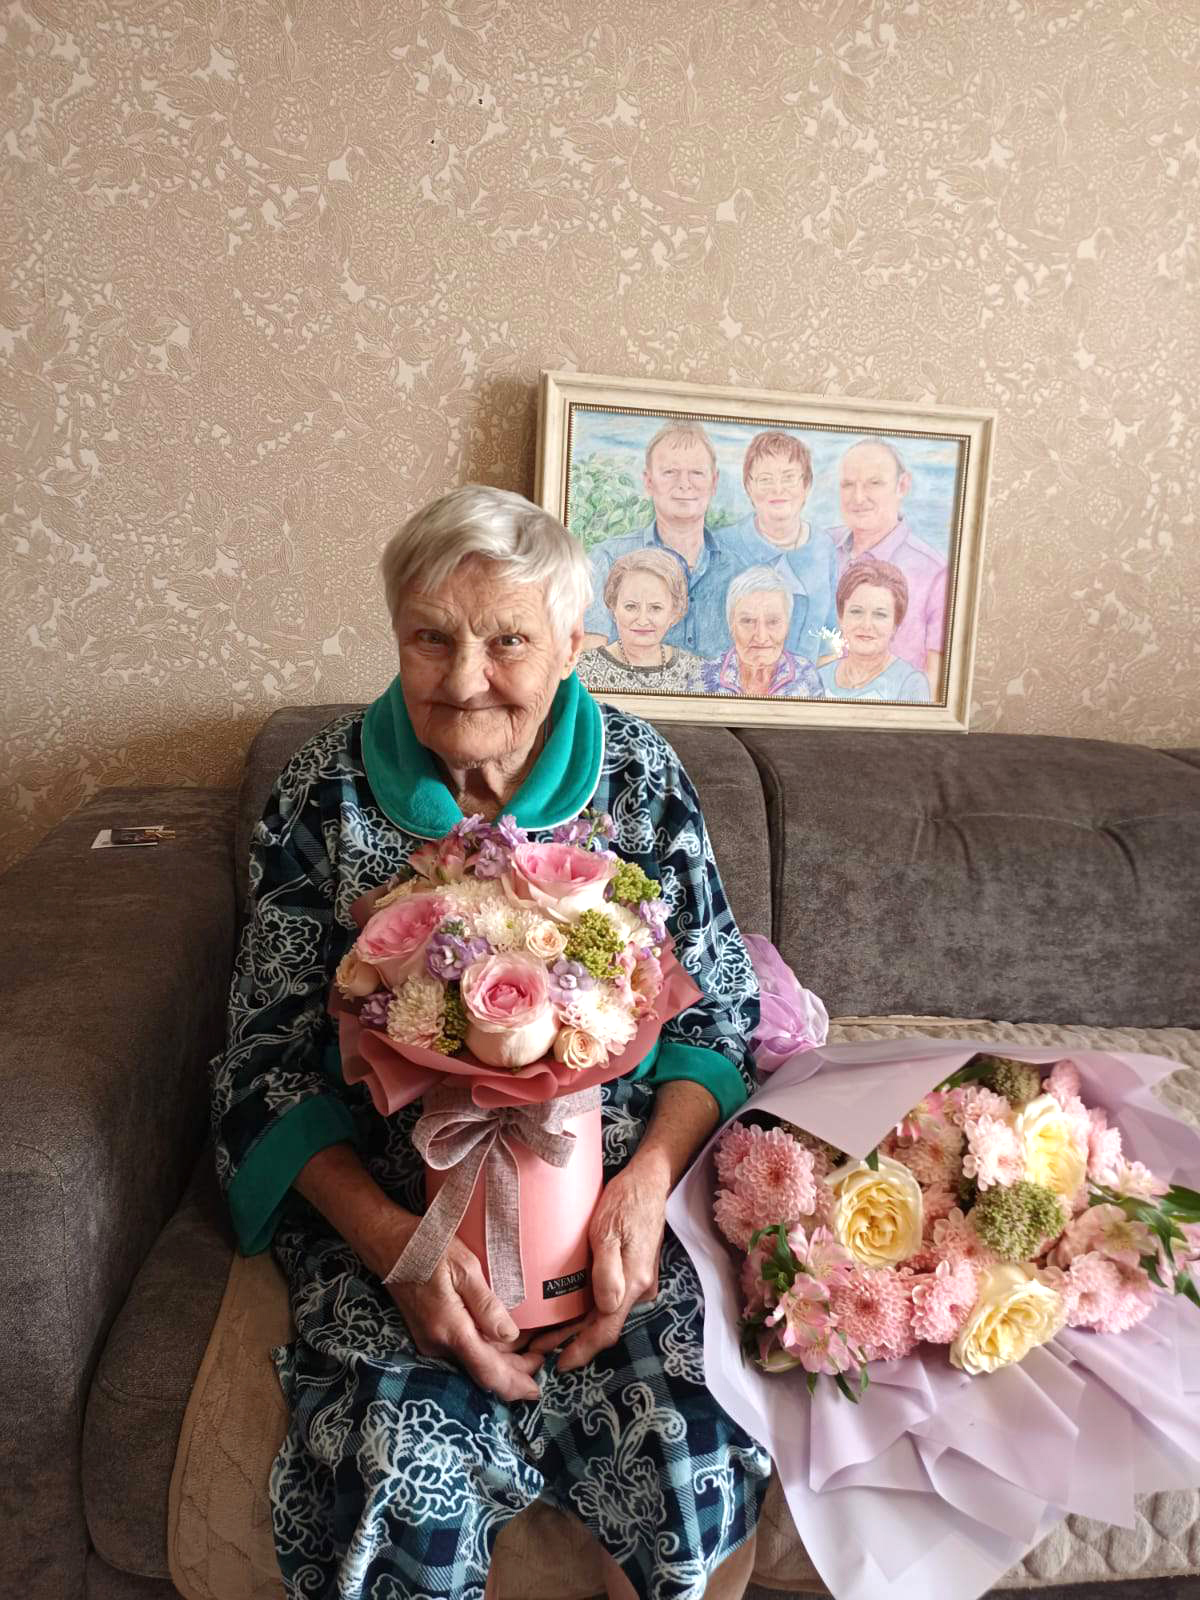 95-летний юбилей отметила Самилюк Феодосья Васильевна